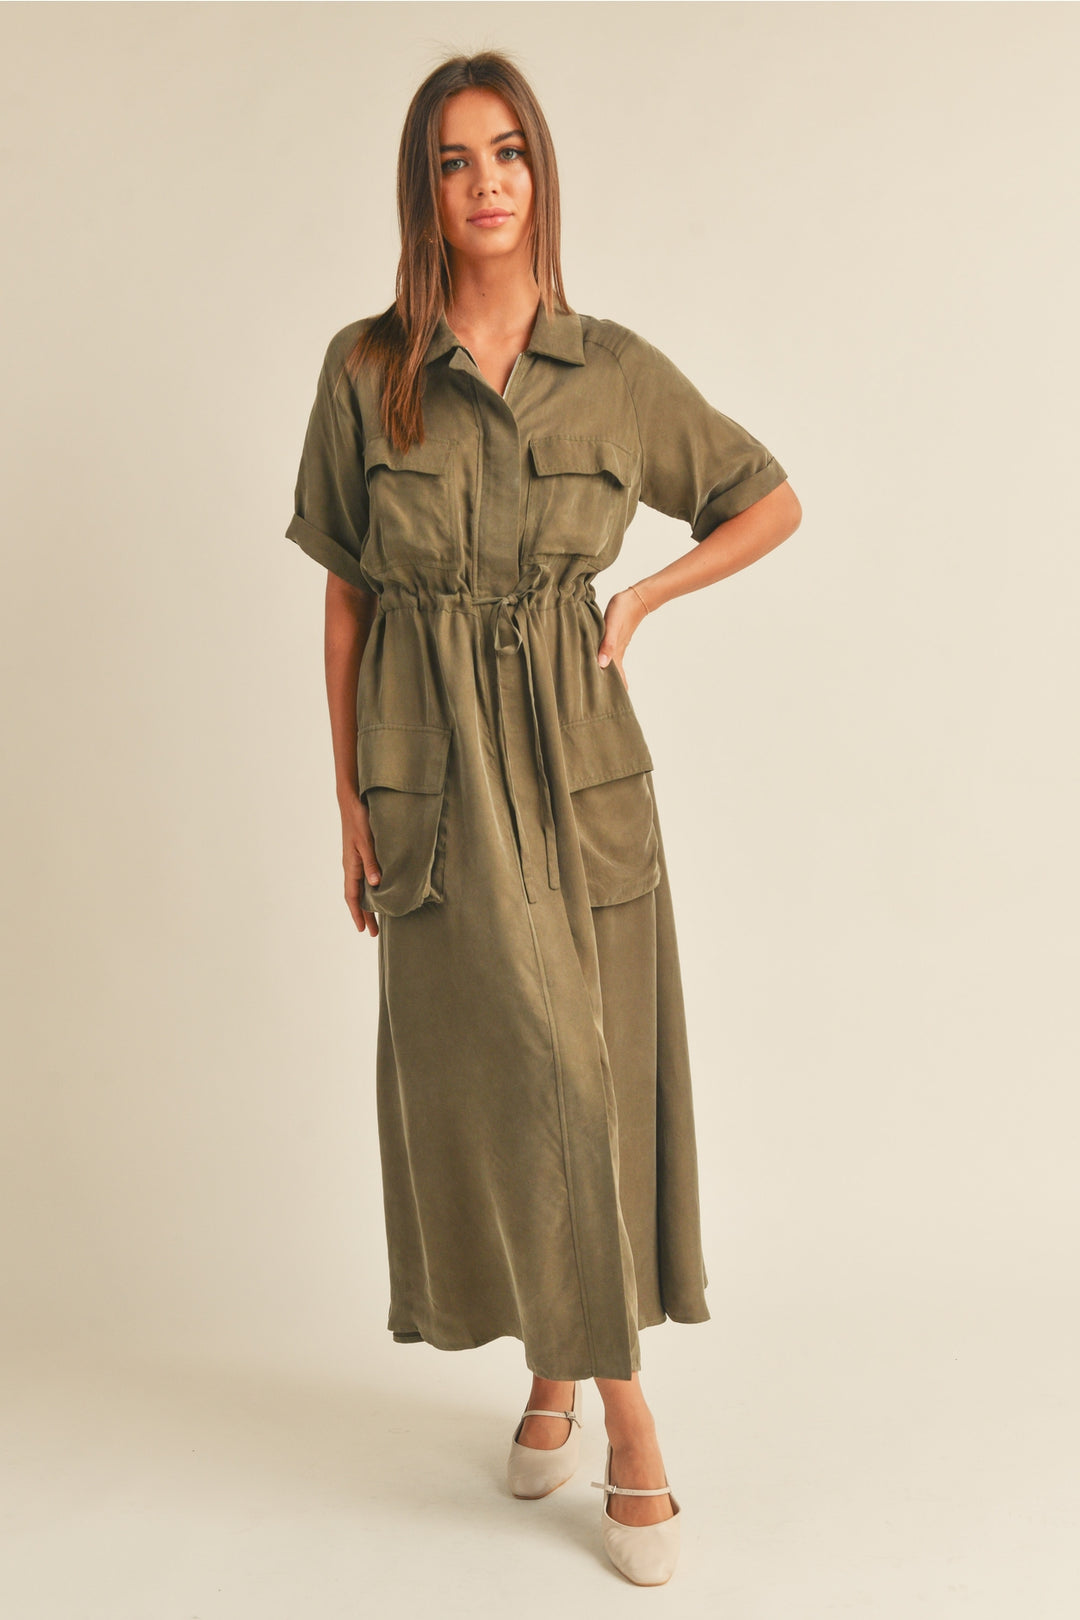 Short Sleeve Viscose with Front Pocket Long Sleeve Dress - Olive